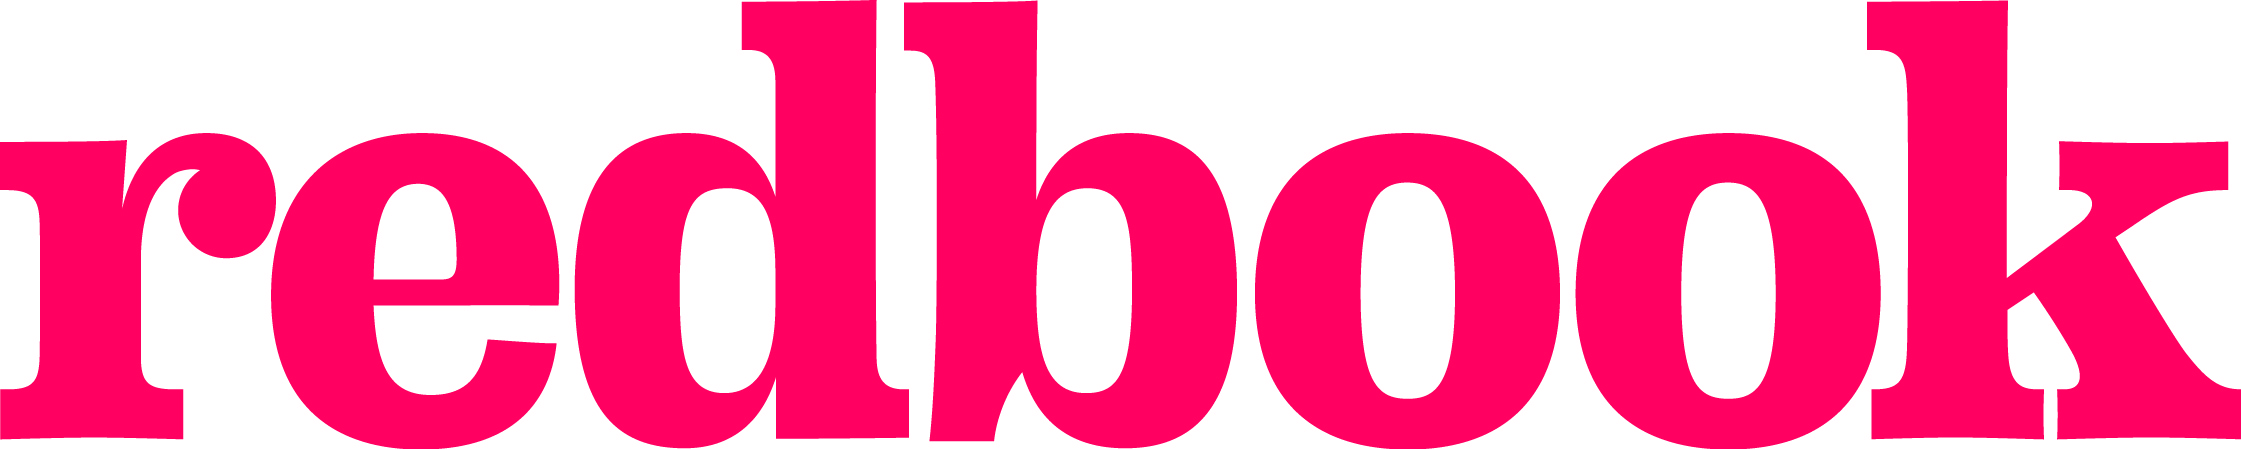 Redbook-Logo.jpg